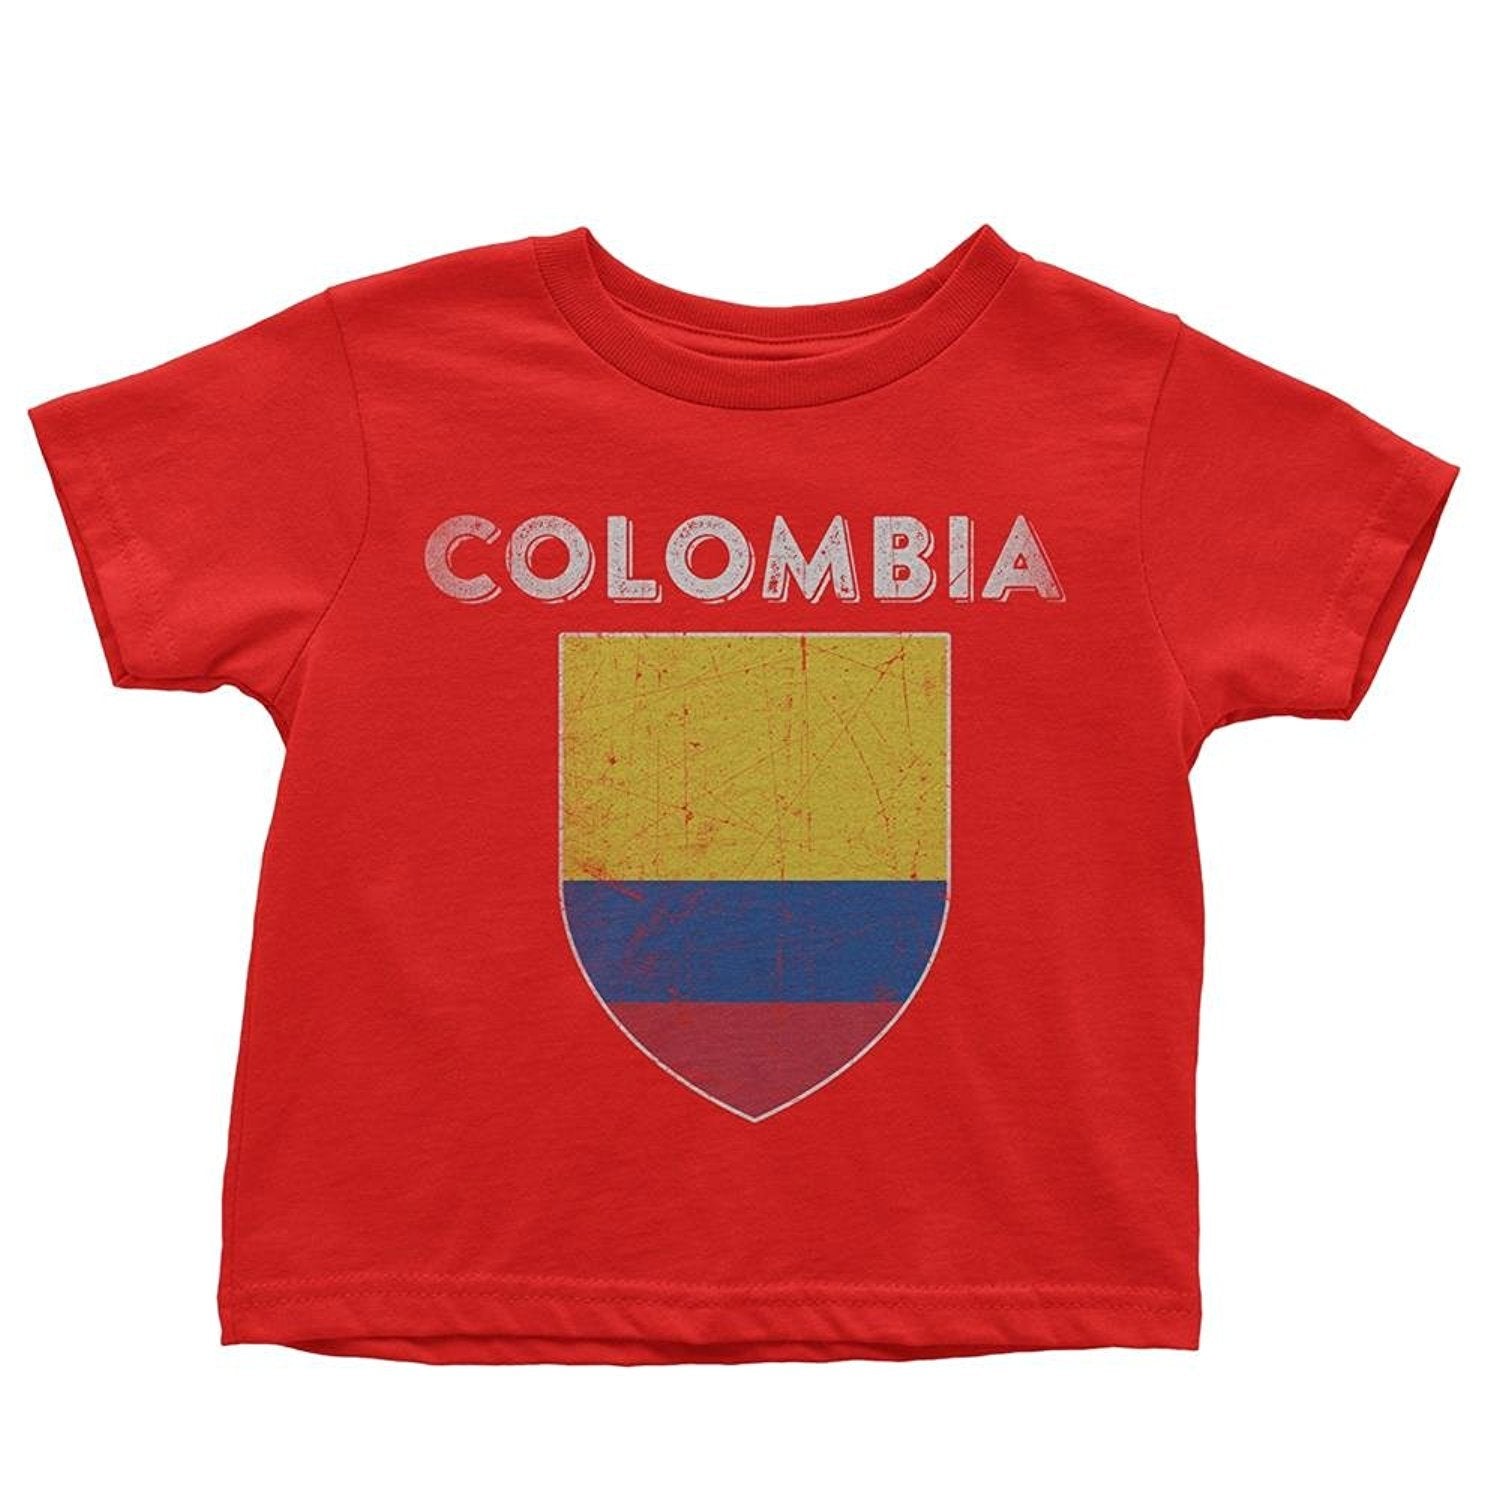 Colombia Flag Tee T-Shirt Infant Baby Shirt Boys II